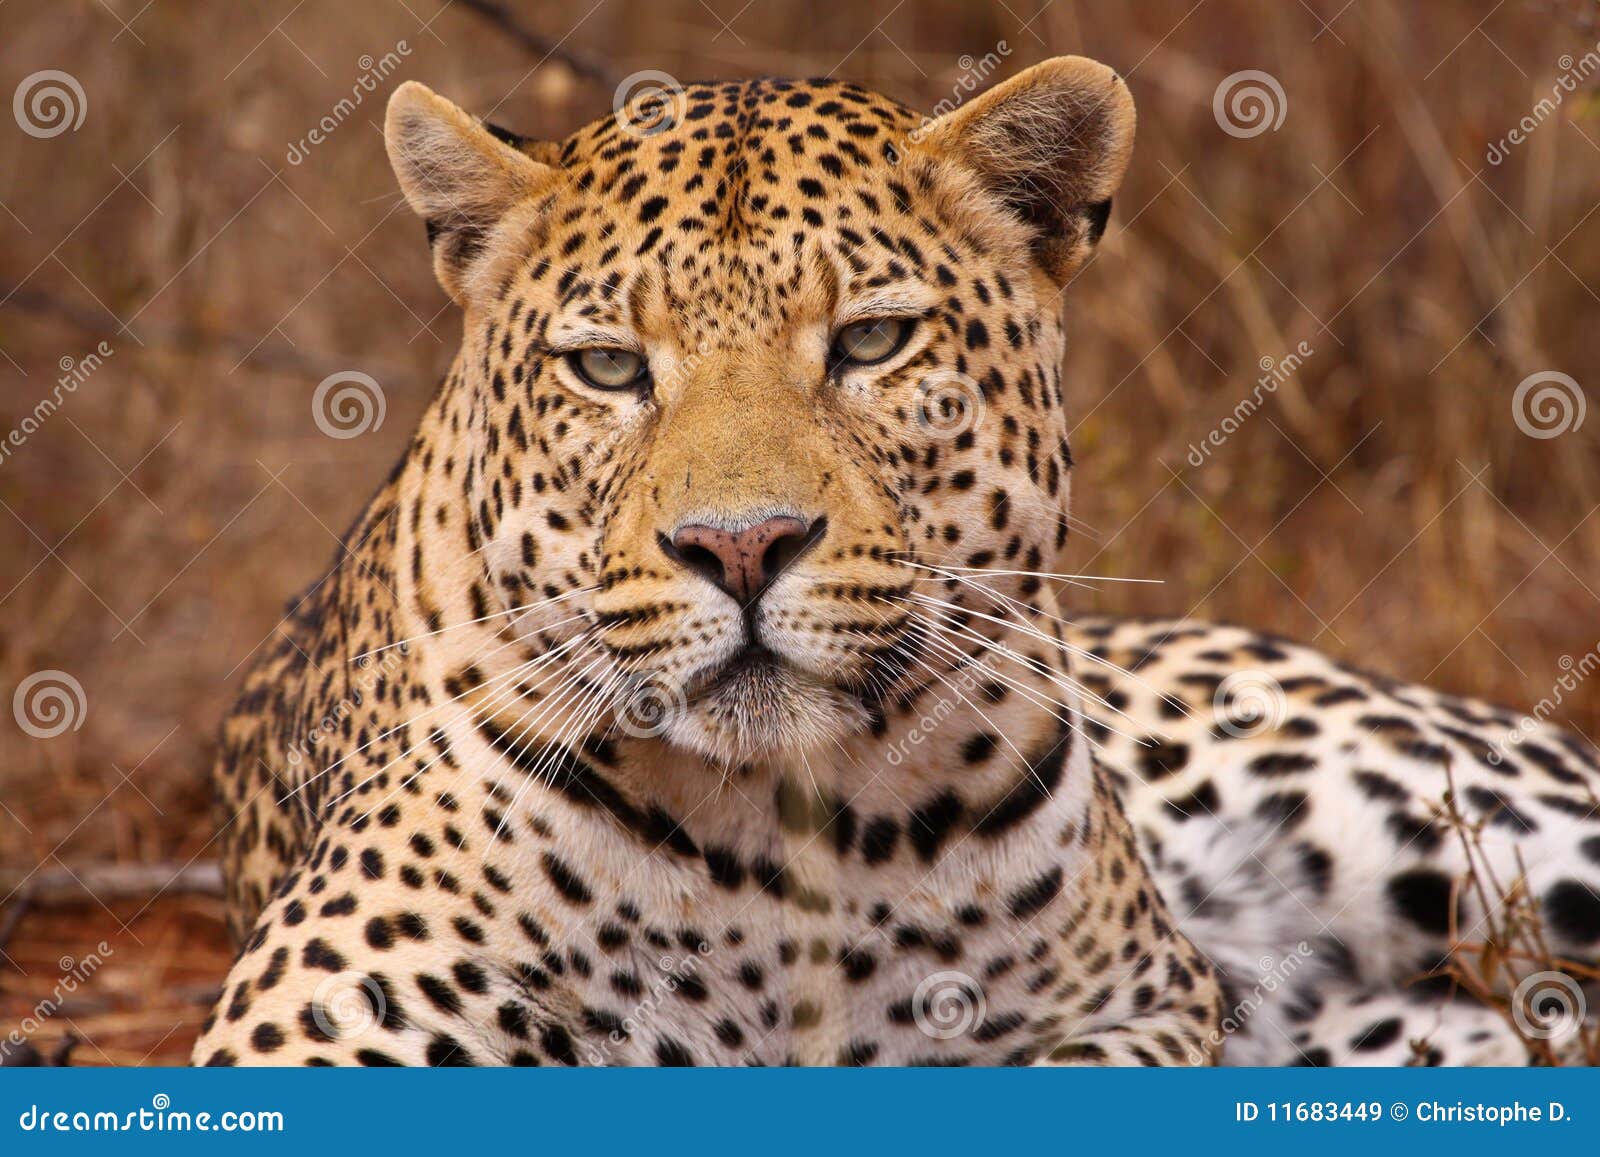 Leopard stock image. Image of feline, quick, hunter, coat - 11683449